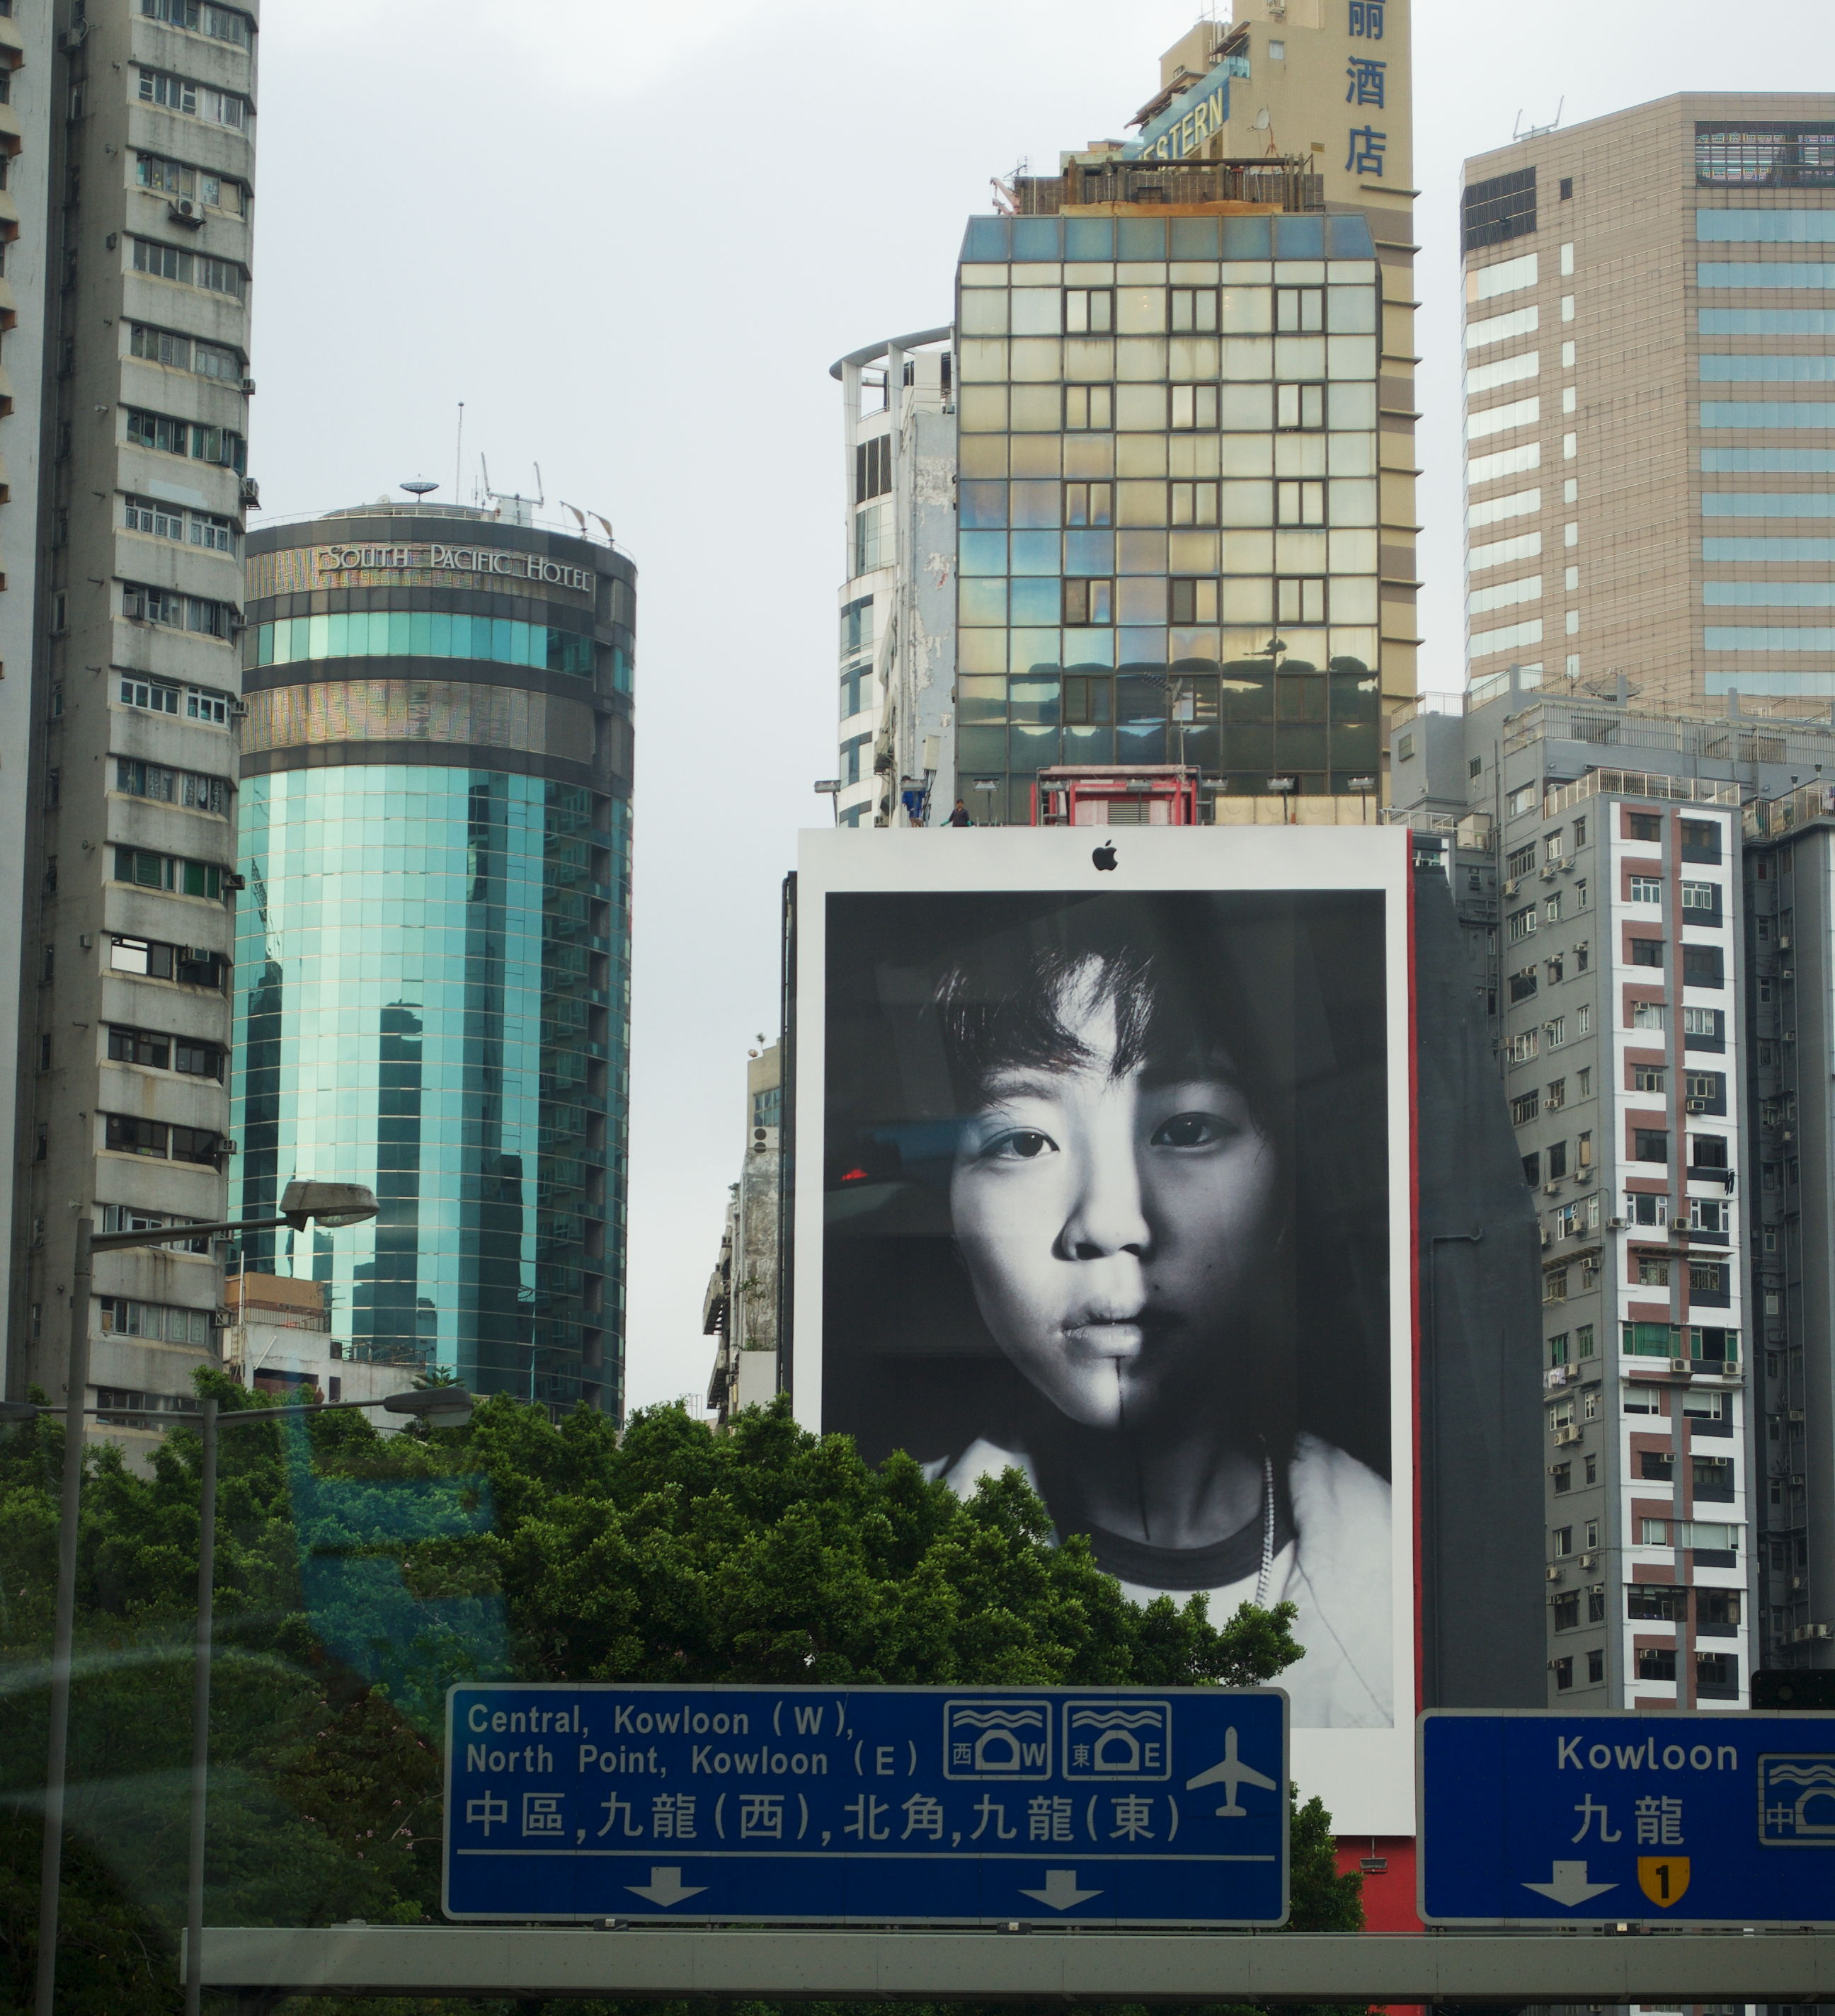 Die Kunst in Hongkong steckt noch in den Kinderschuhen.